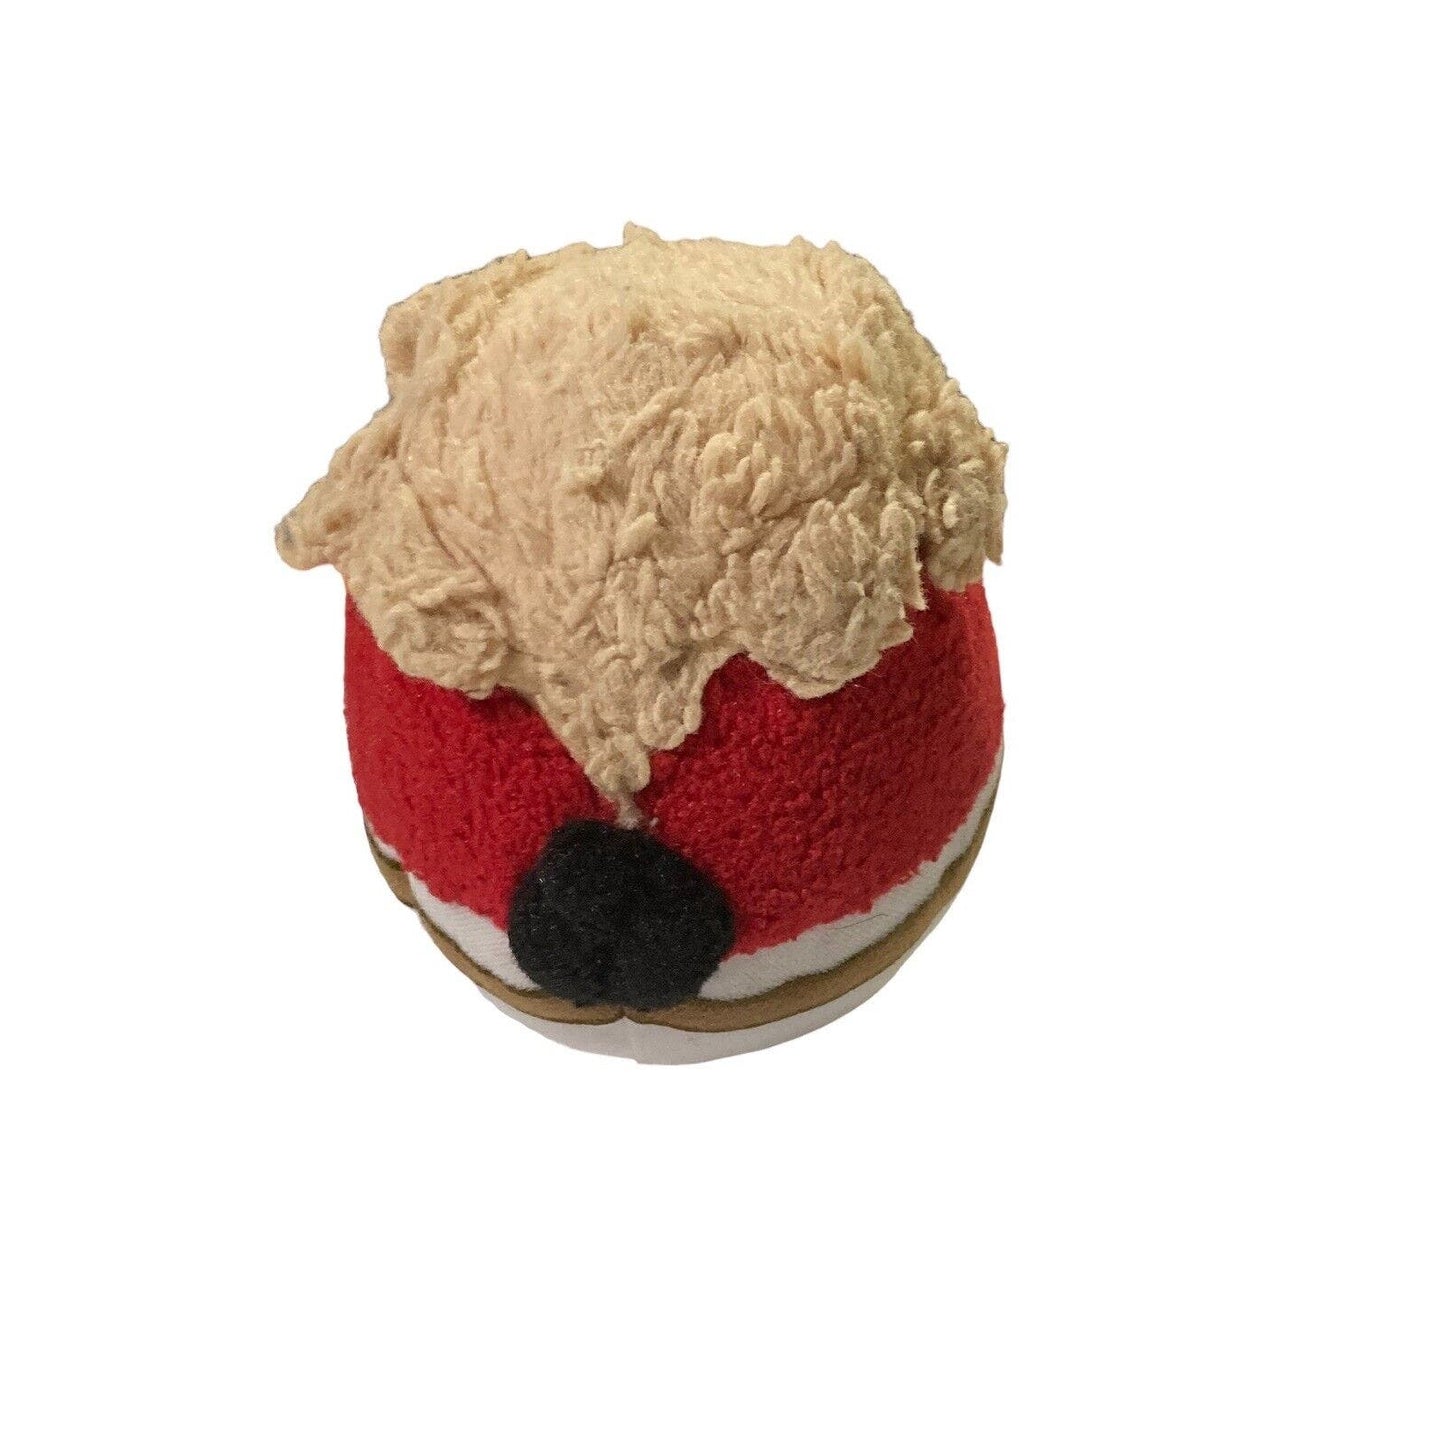 Angry Birds - Star Wars Luke Skywalker Large 9” Plush Stuffed Animal Red 2012